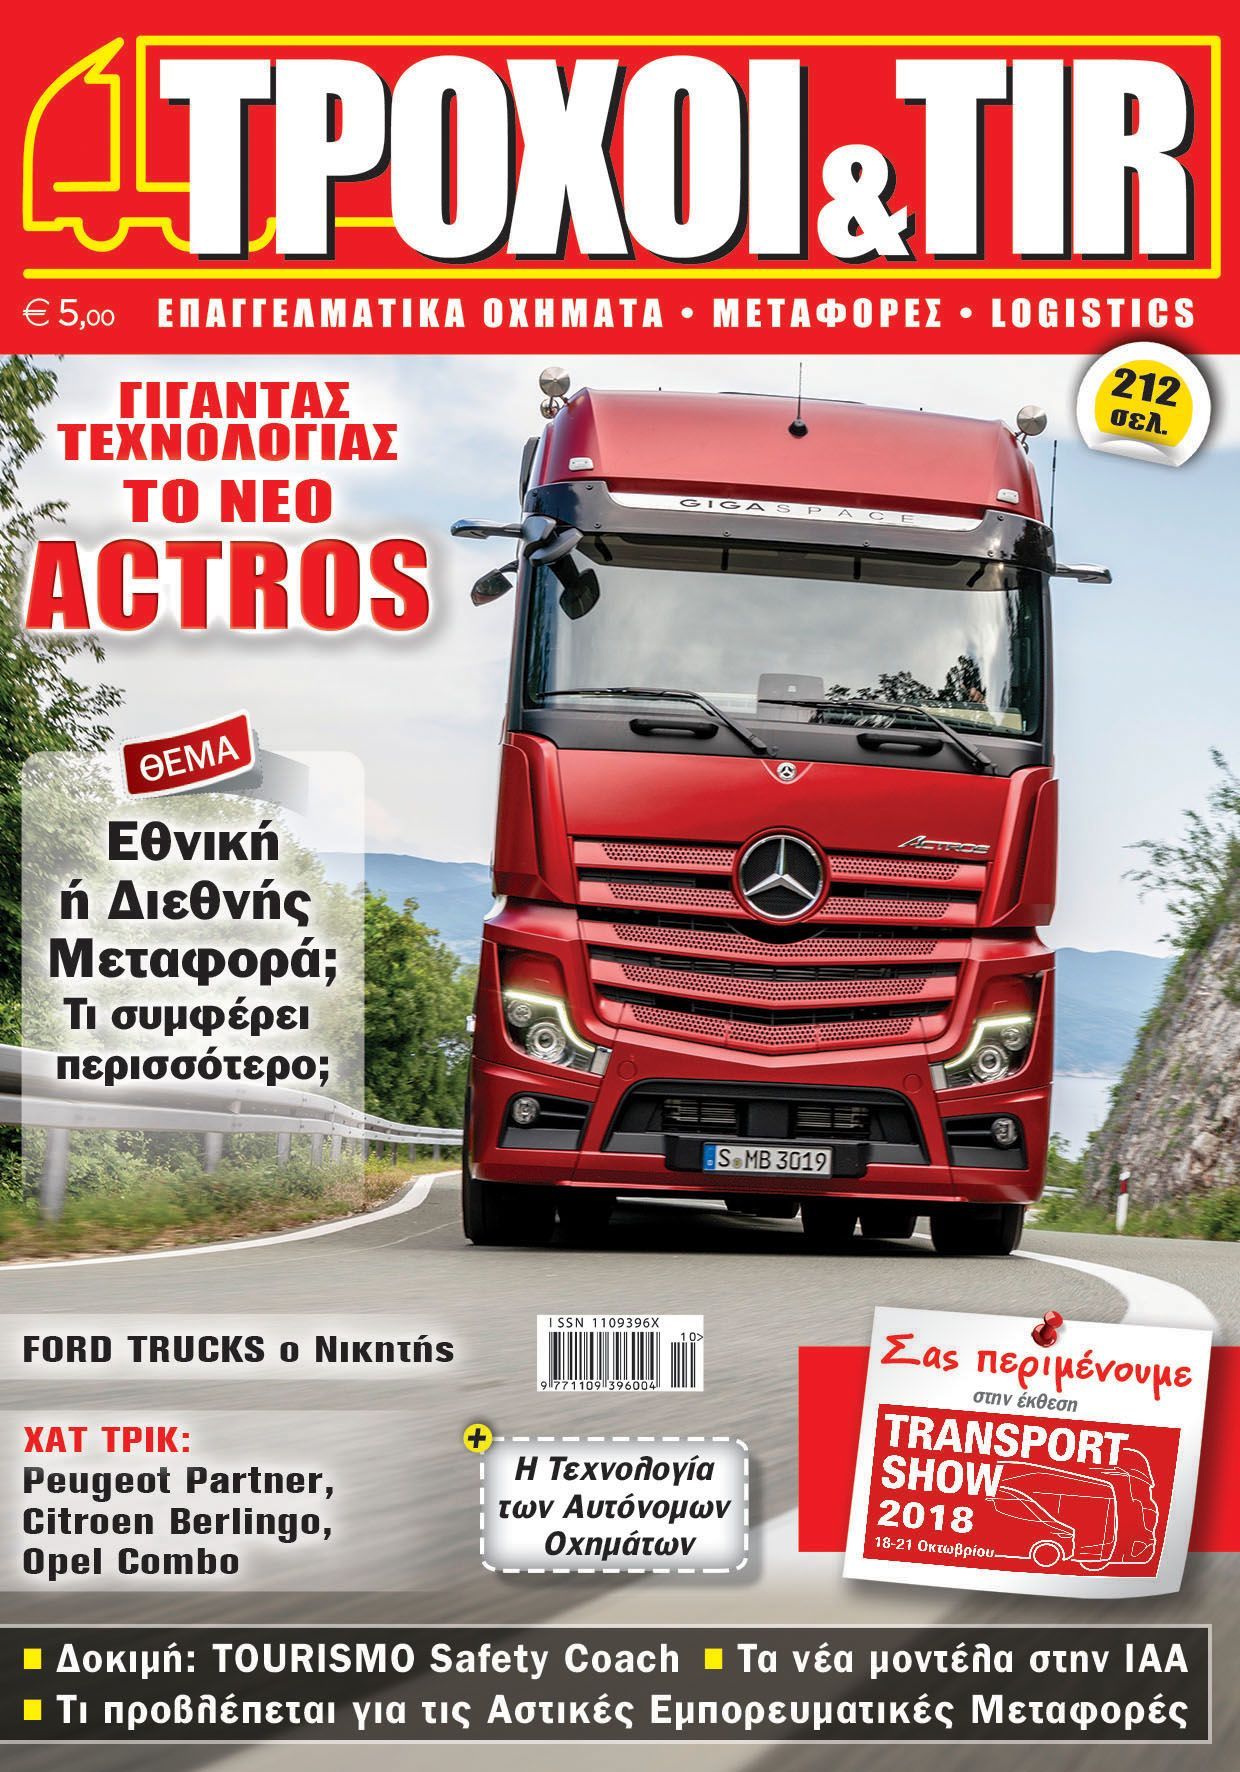 Troxoikaitir issue 366 october 2018 cover